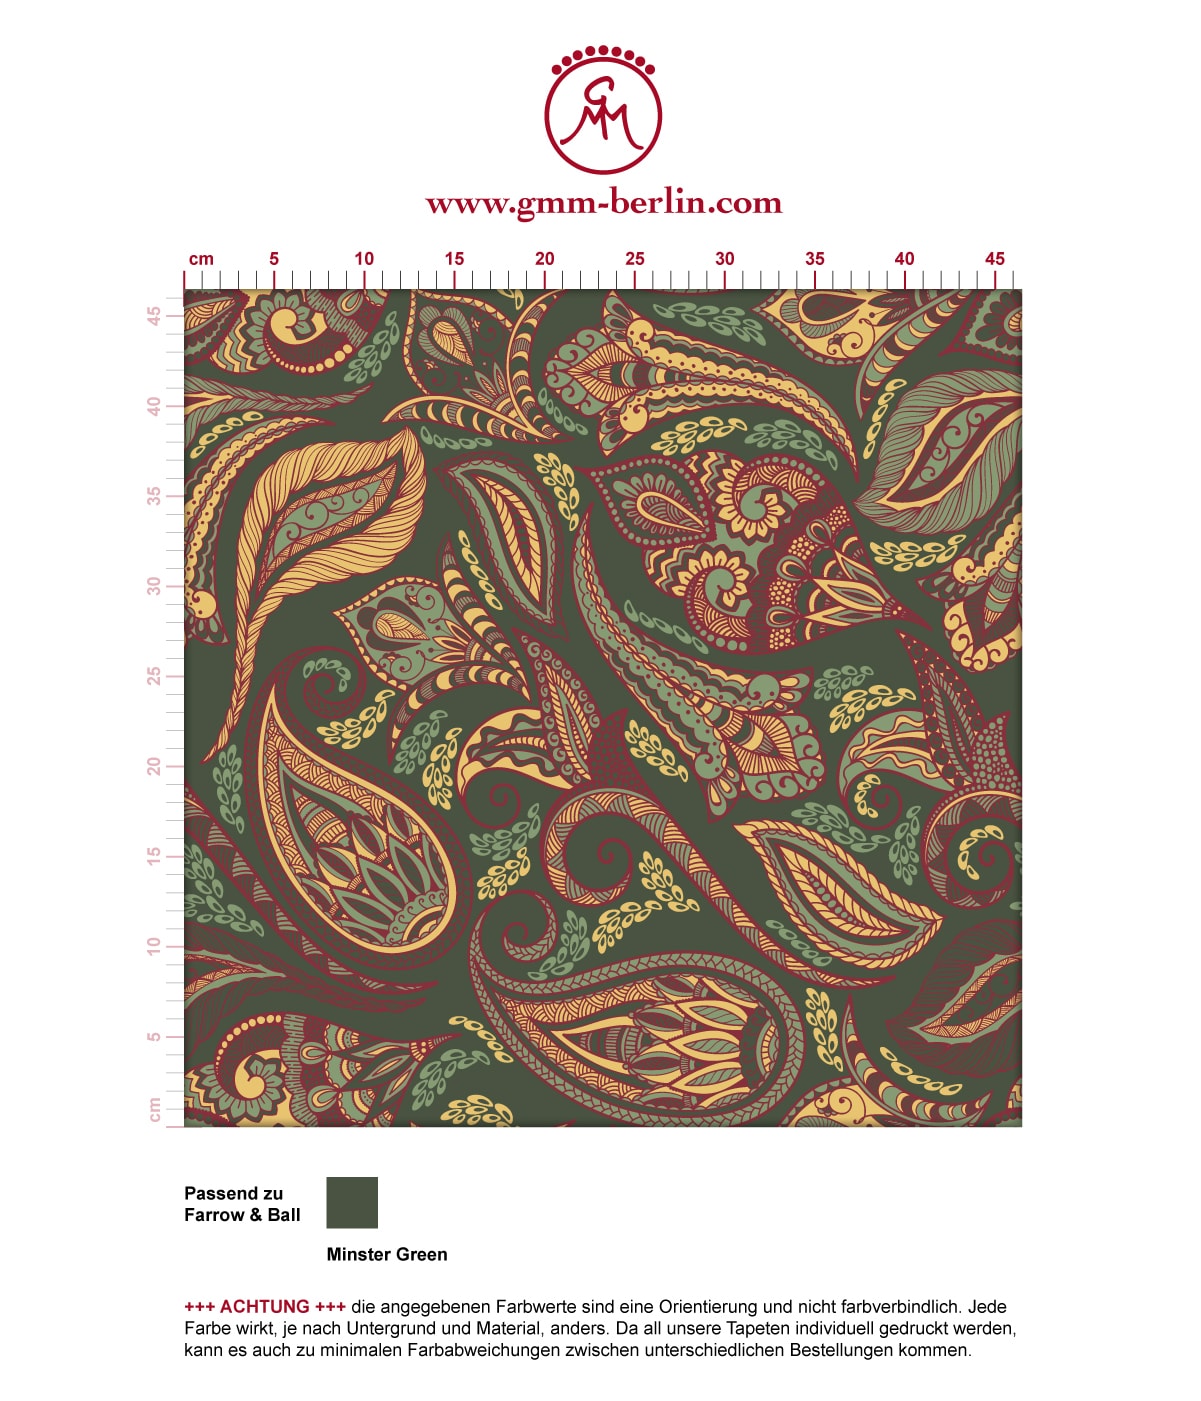 Edle oliv grüne Designer Tapete "Grand Paisley" mit großem dekorativem Blatt Muster angepasst an Farrow and Ball Wandfarbe. Aus dem GMM-BERLIN.com Sortiment: Schöne Tapeten in der Farbe: dunkel grün